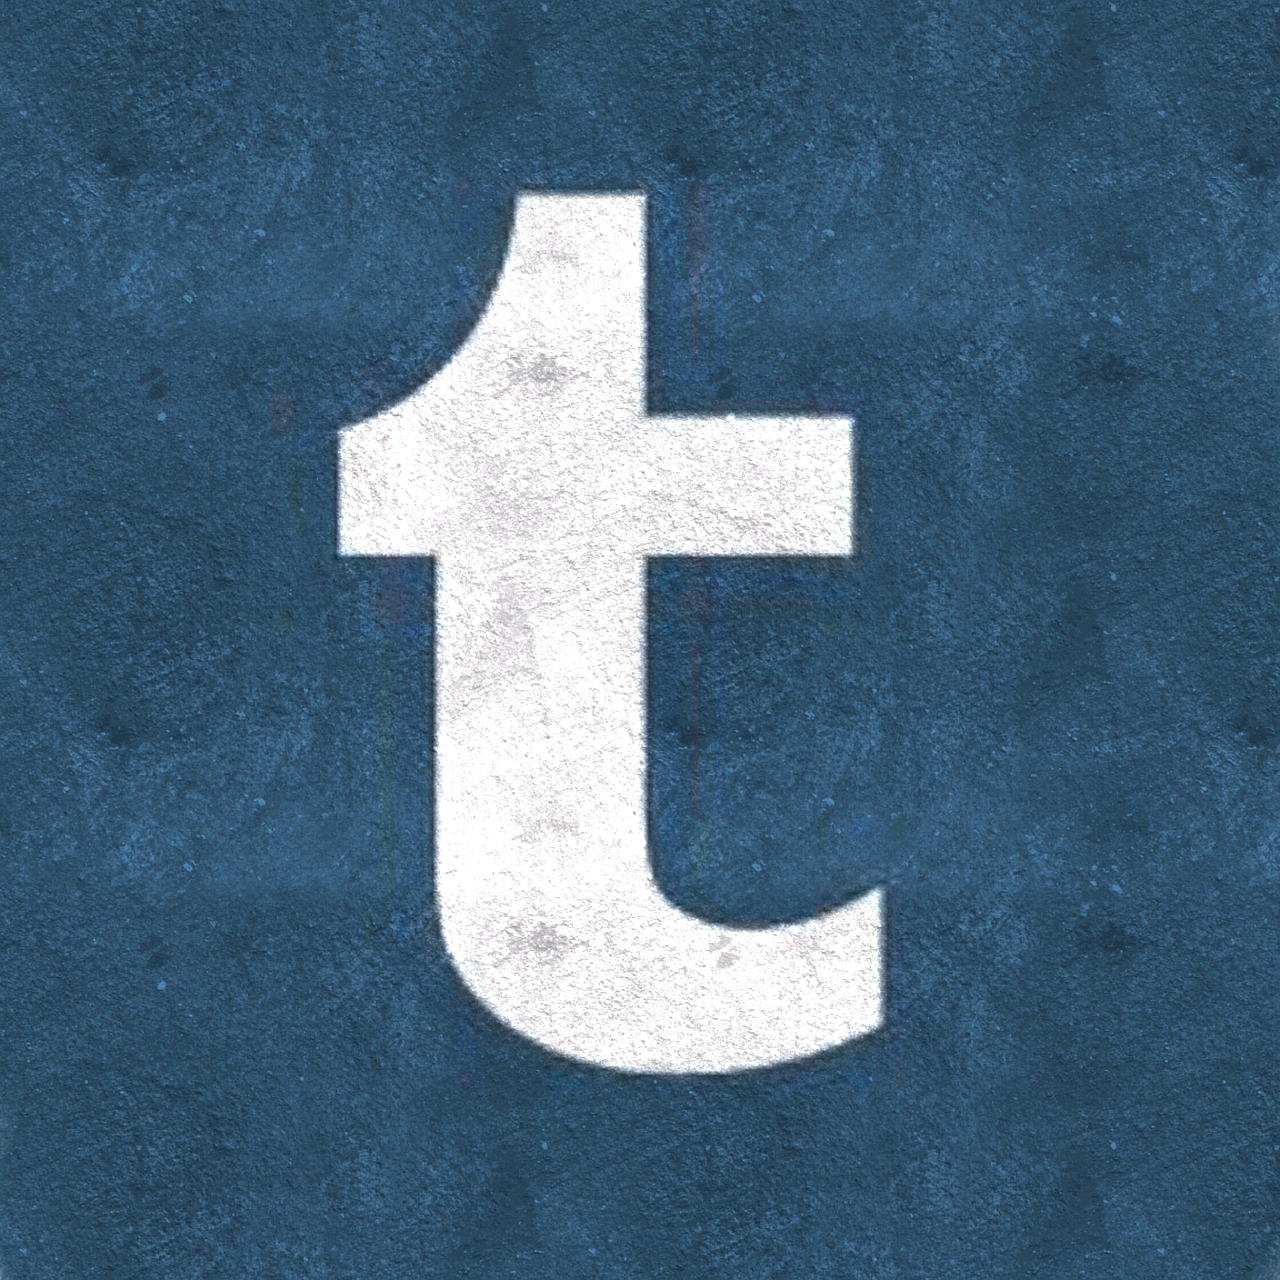 tumblr logo social networks free photo